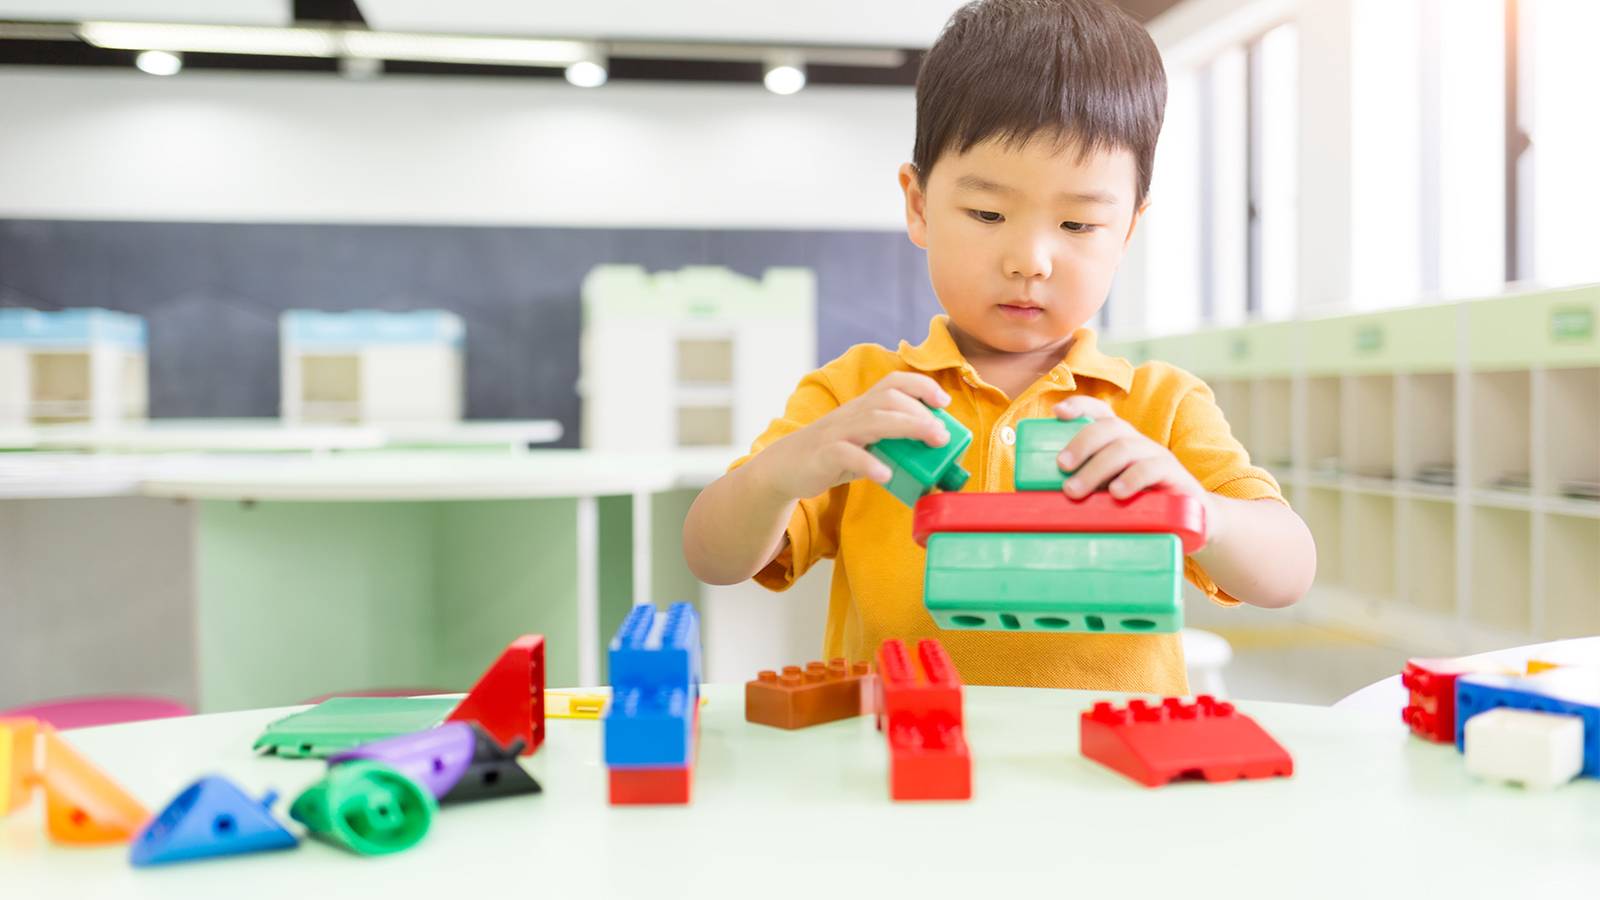 11 things to note when choosing a preschool